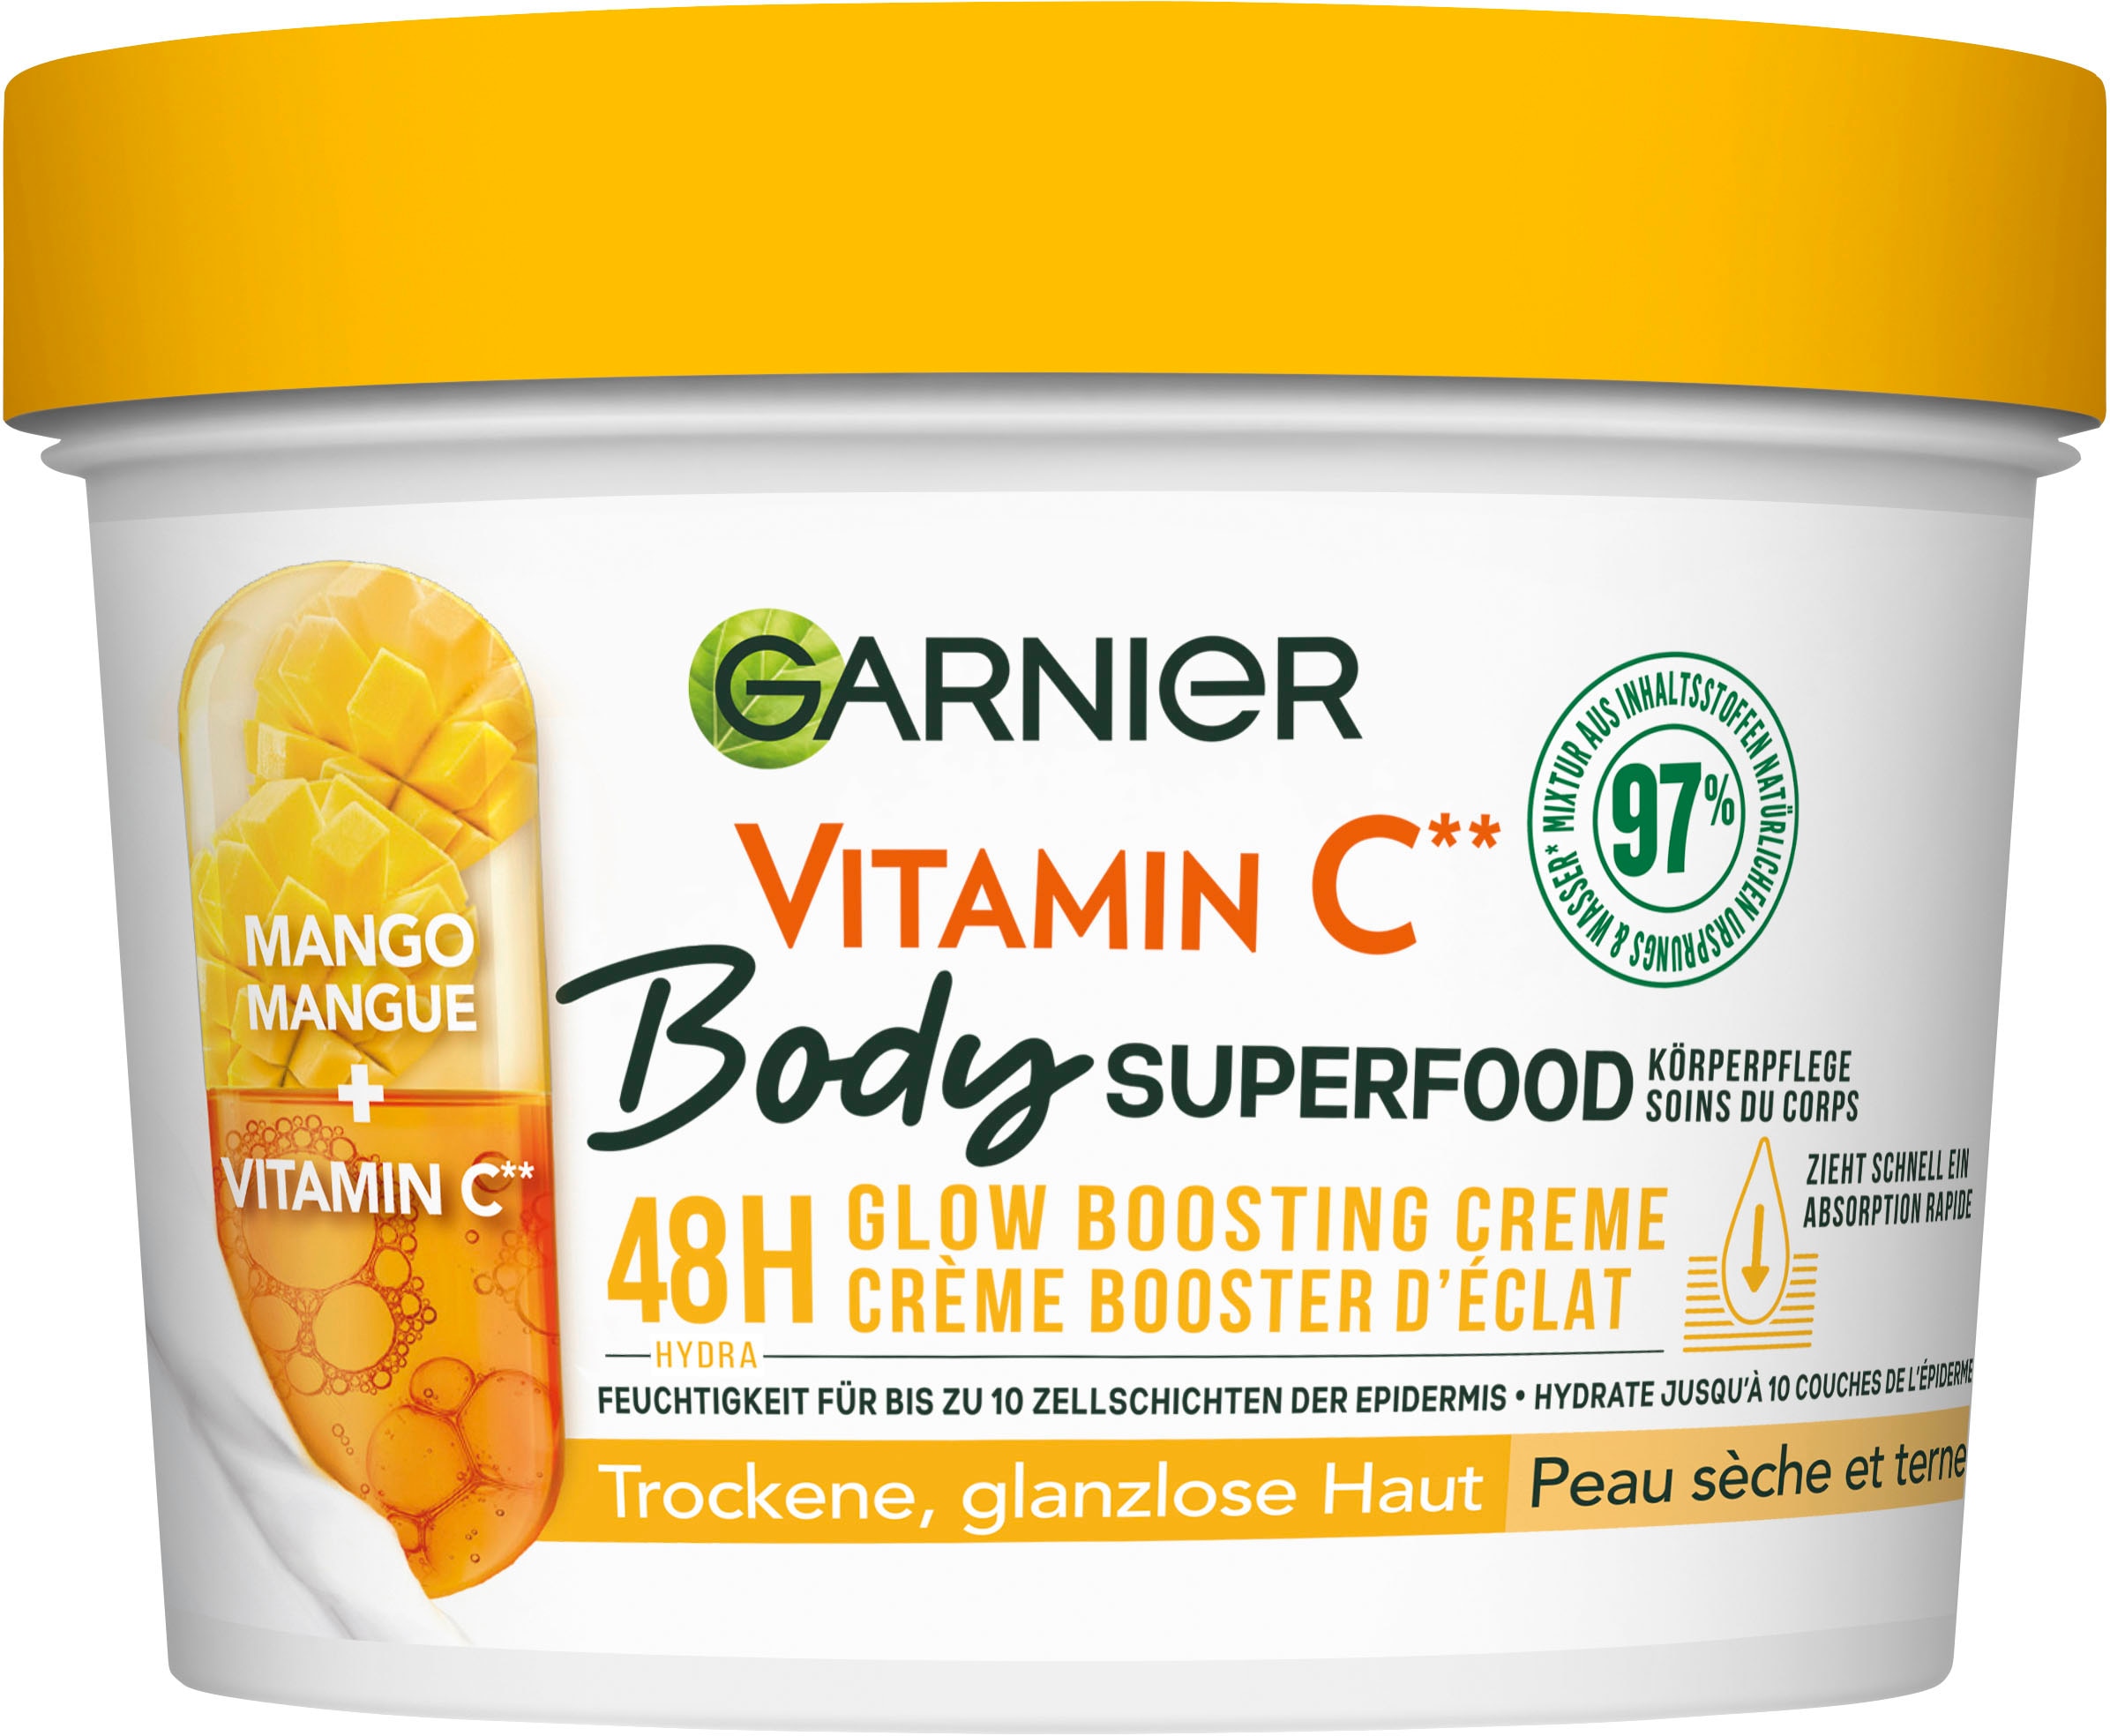 Körpercreme »Garnier Body Superfood Mango Vitamin C«, mit Vitamin C